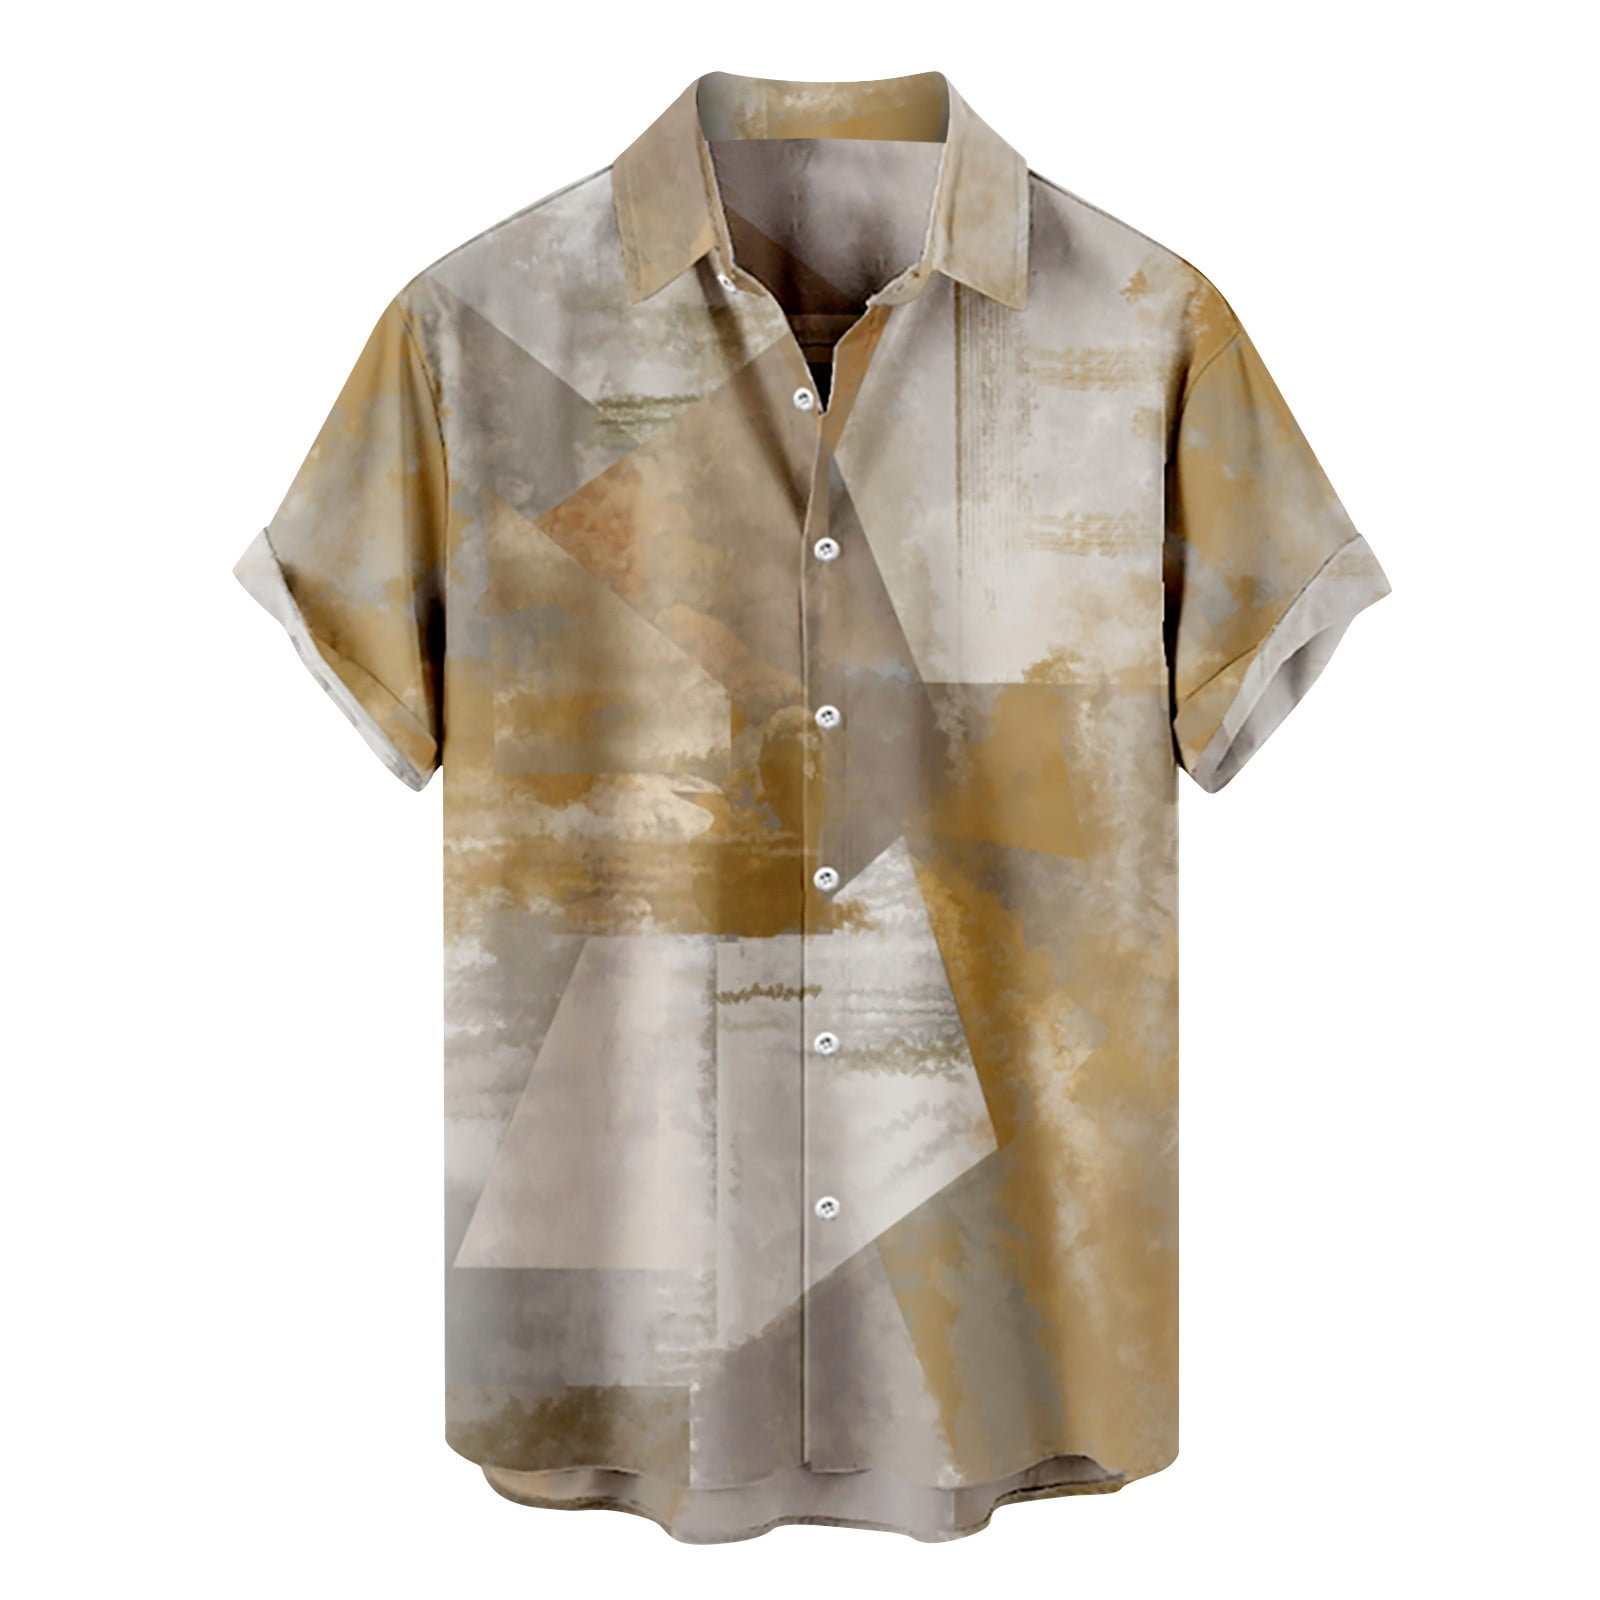 ASEIDFNSA Polo Ralph Lauren Shirts for Men Mens Tops Beach Mens Printed  Hawaiian Shirts Short Sleeve Button Beach Shirts Shirt for Man 